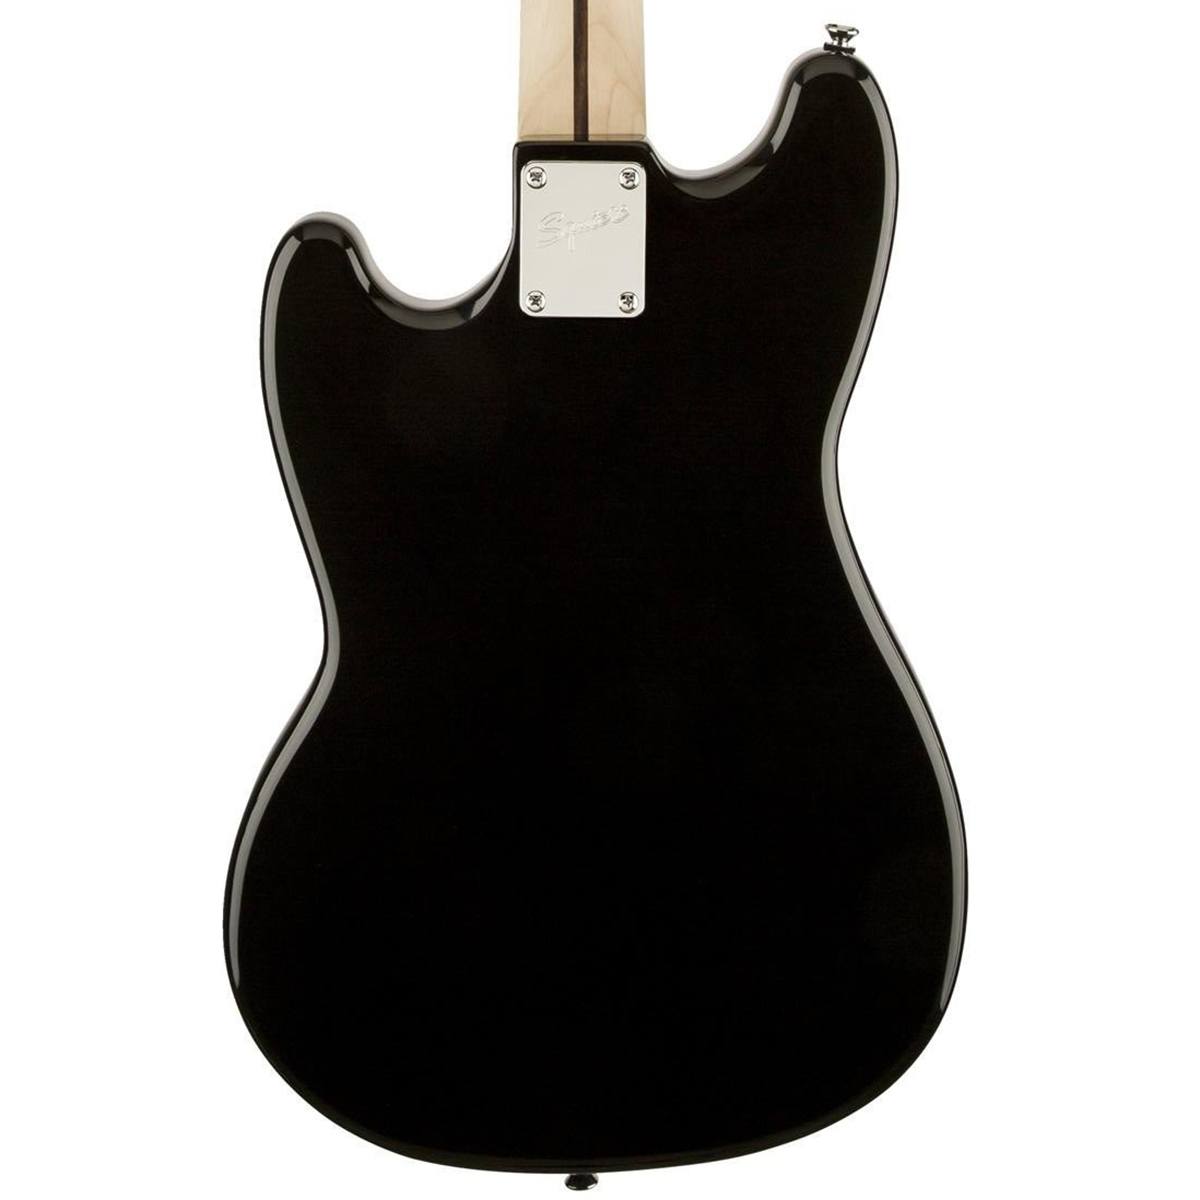 Fender Squier Bronco Bass Electric Bass Guitar - Black - image 2 of 7